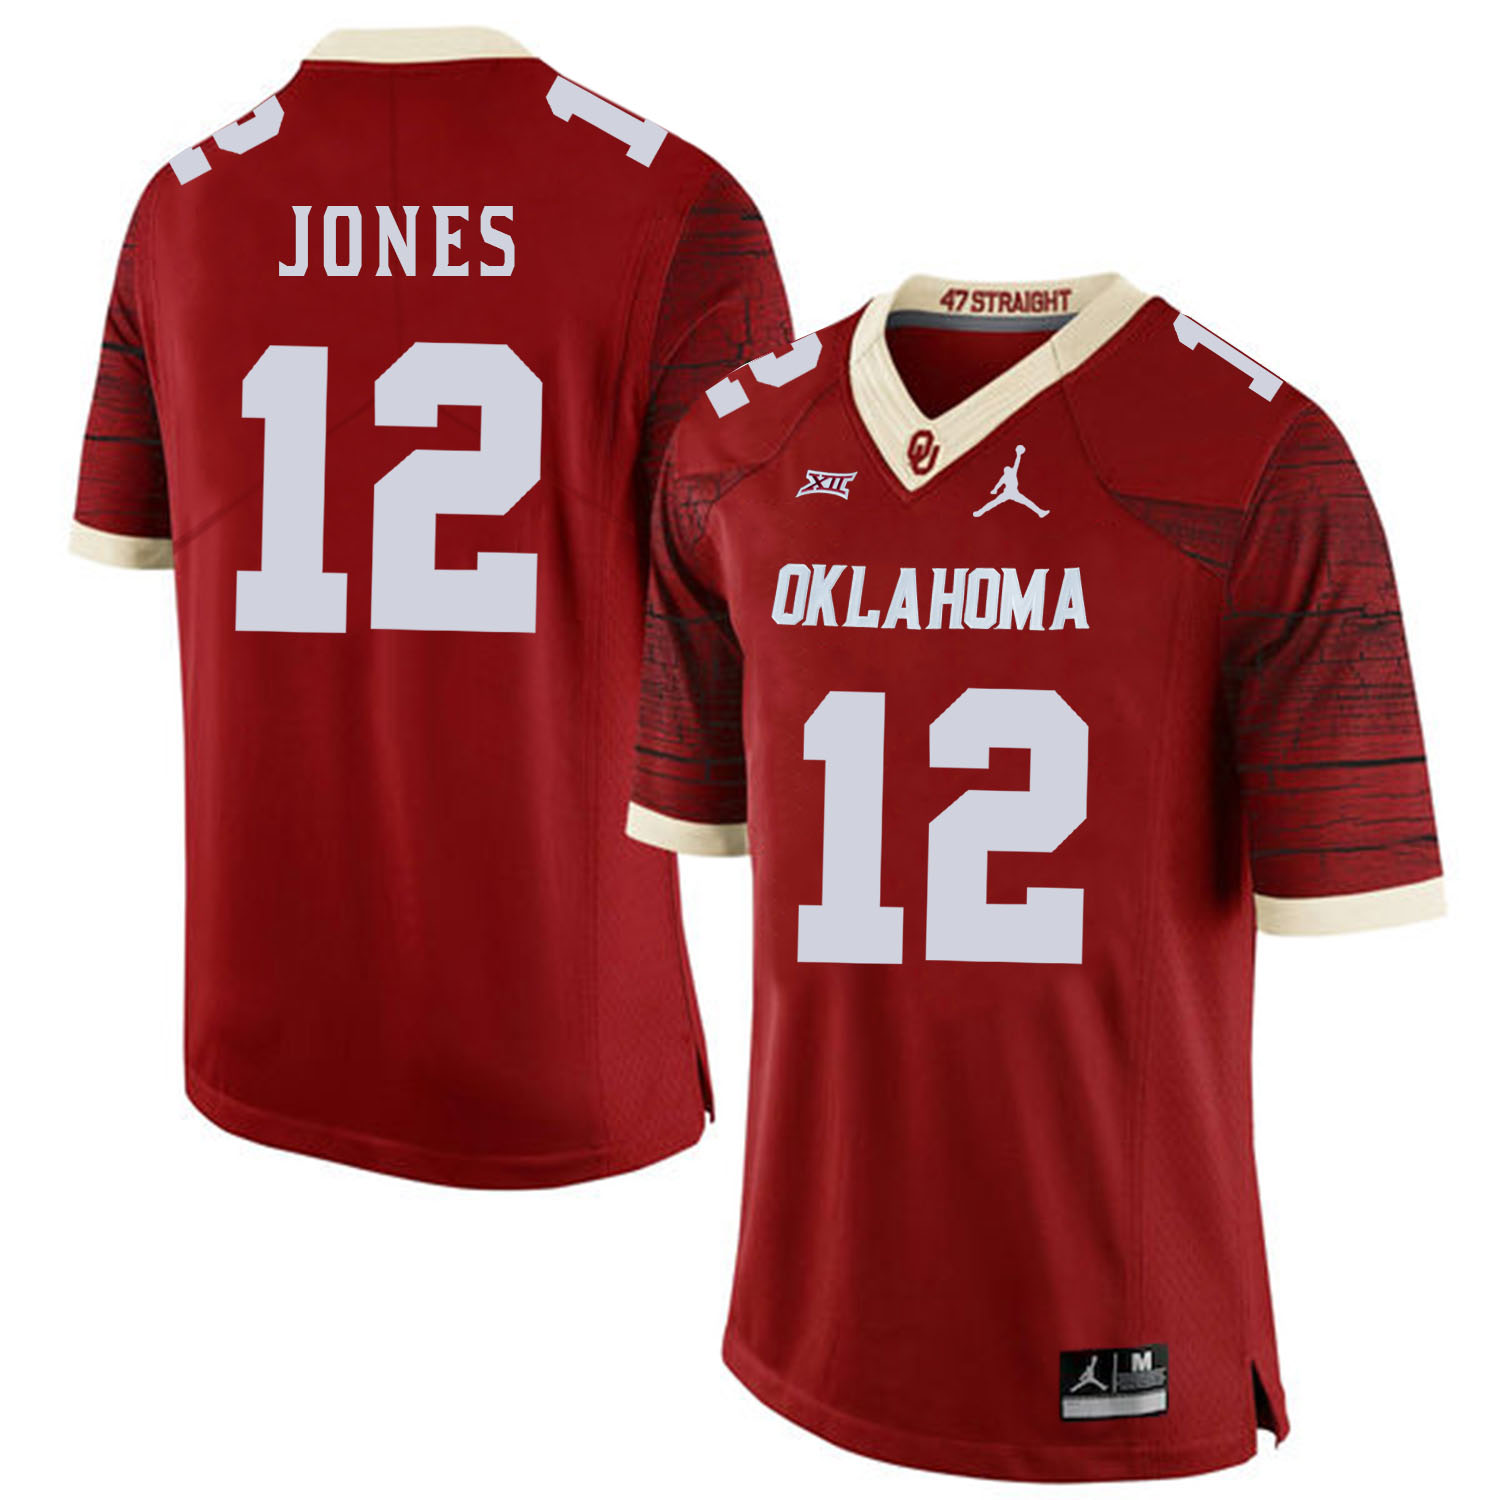 Oklahoma Sooners 12 Landry Jones Red 47 Game Winning Streak College Football Jersey - Click Image to Close